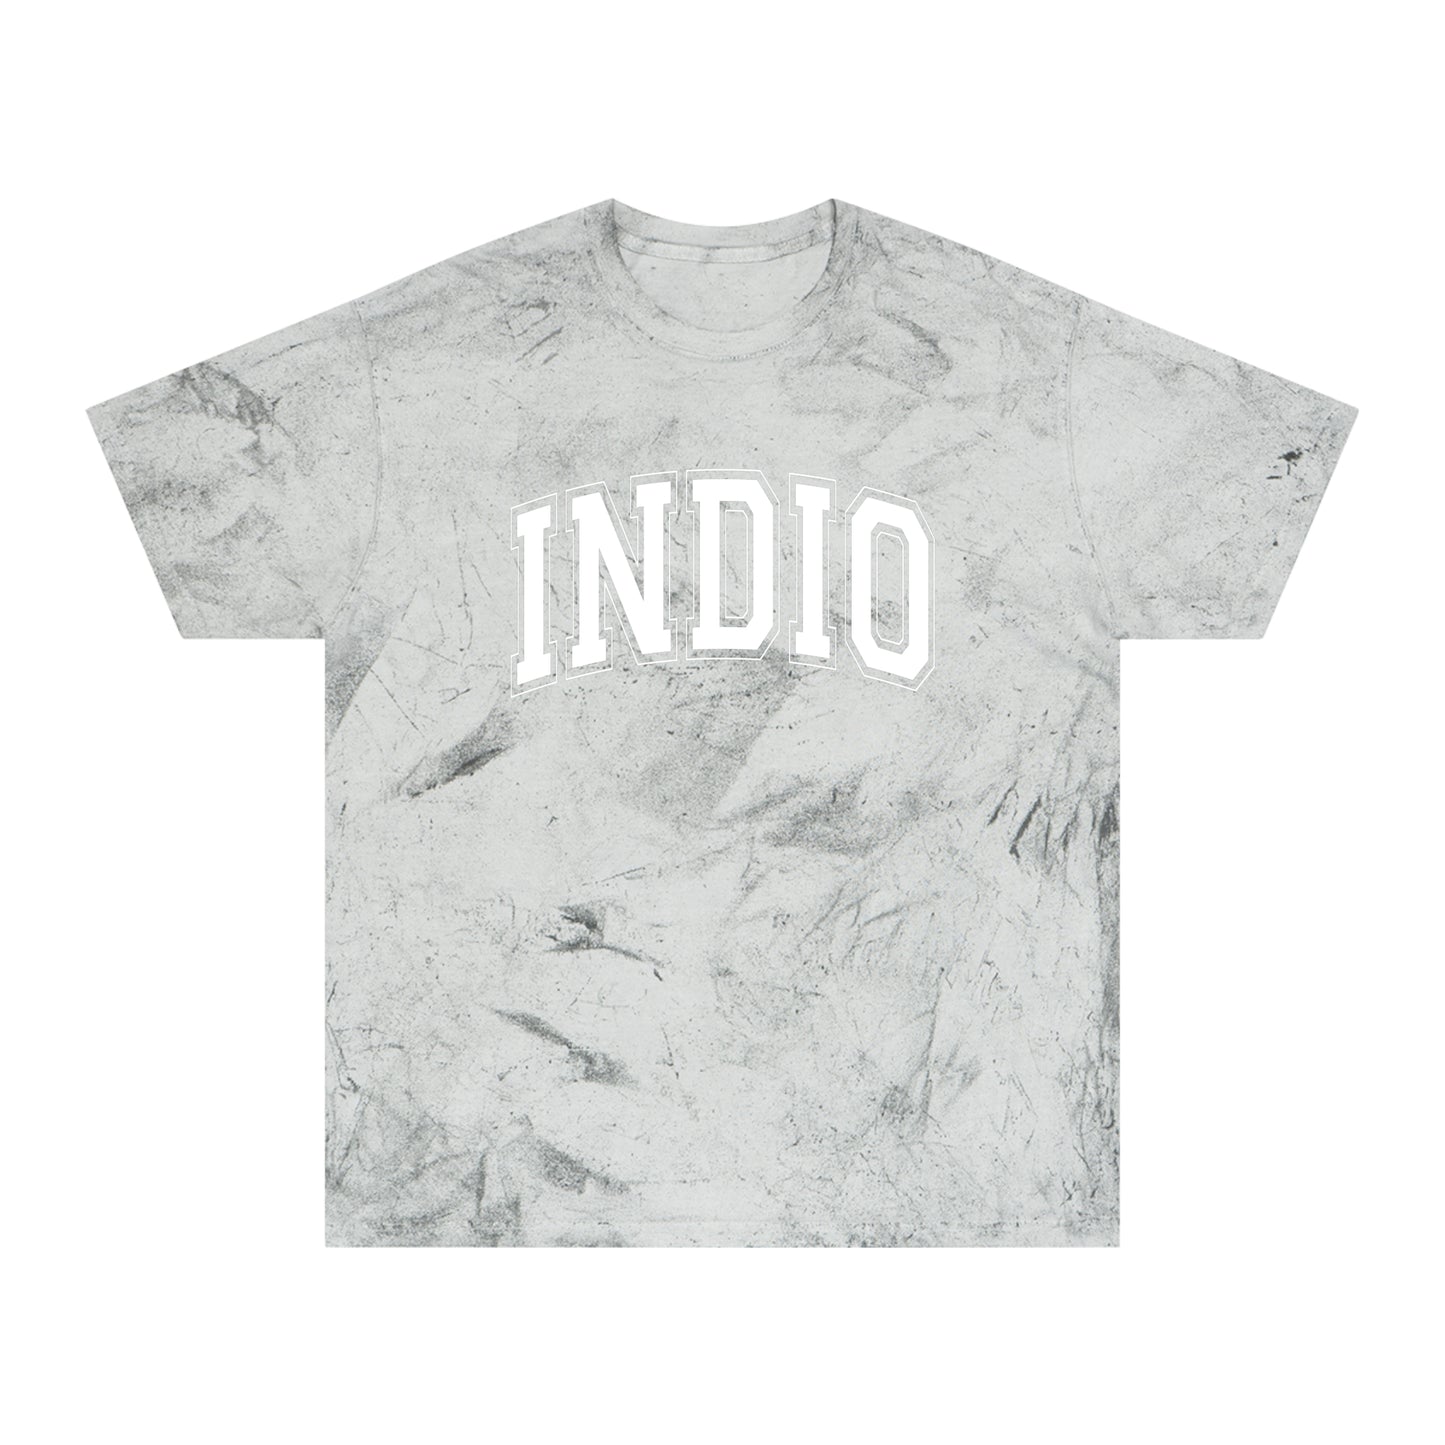 Indio Premium Dye Bomb T-Shirt